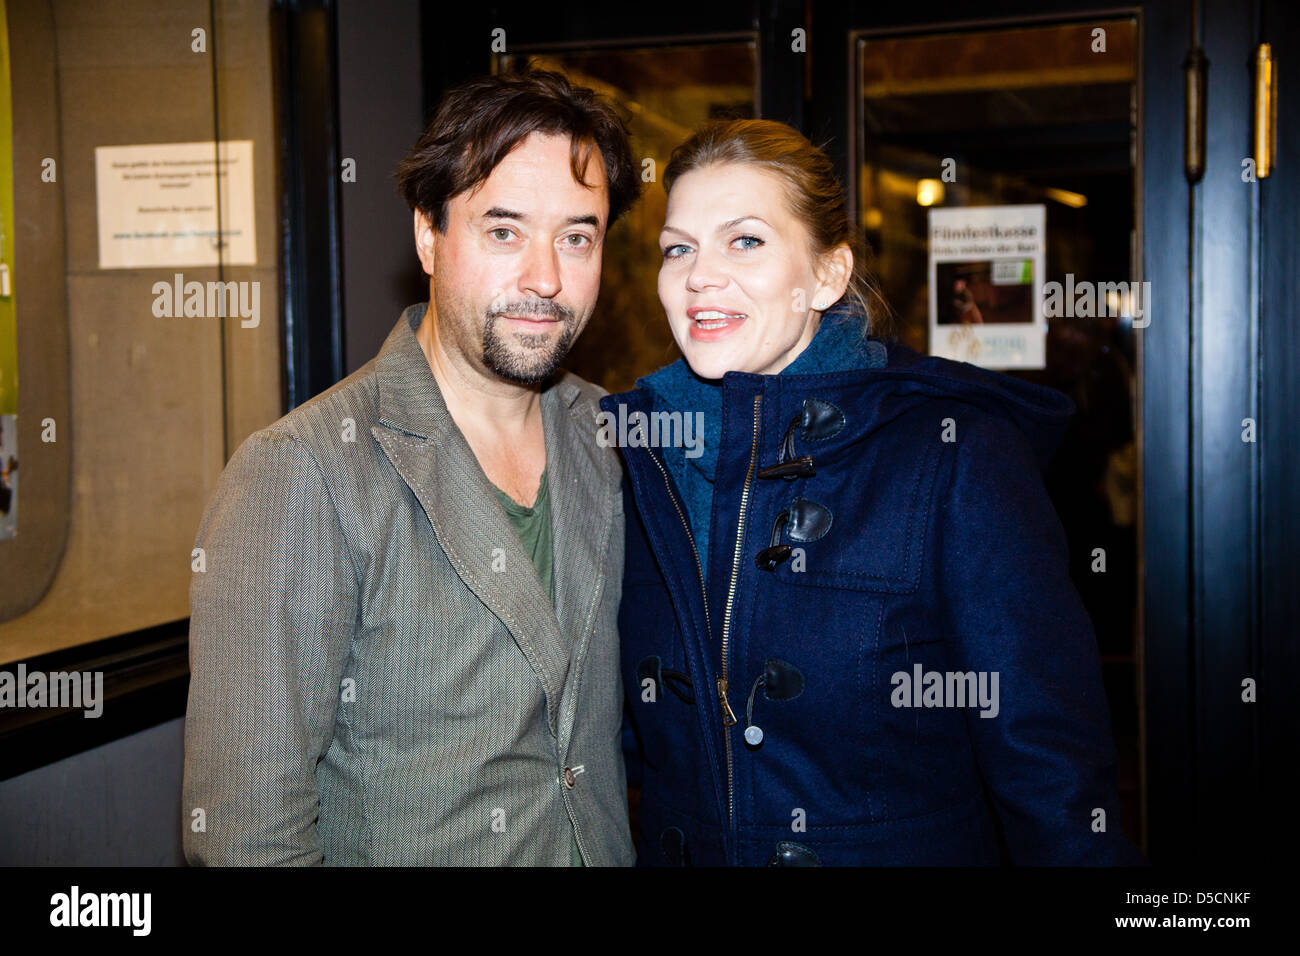 Jan Josef Liefers and wife Anna Loos at the premiere of 'Simon' at Passage Ki cinema. Hamburg Germany. Stock Photo